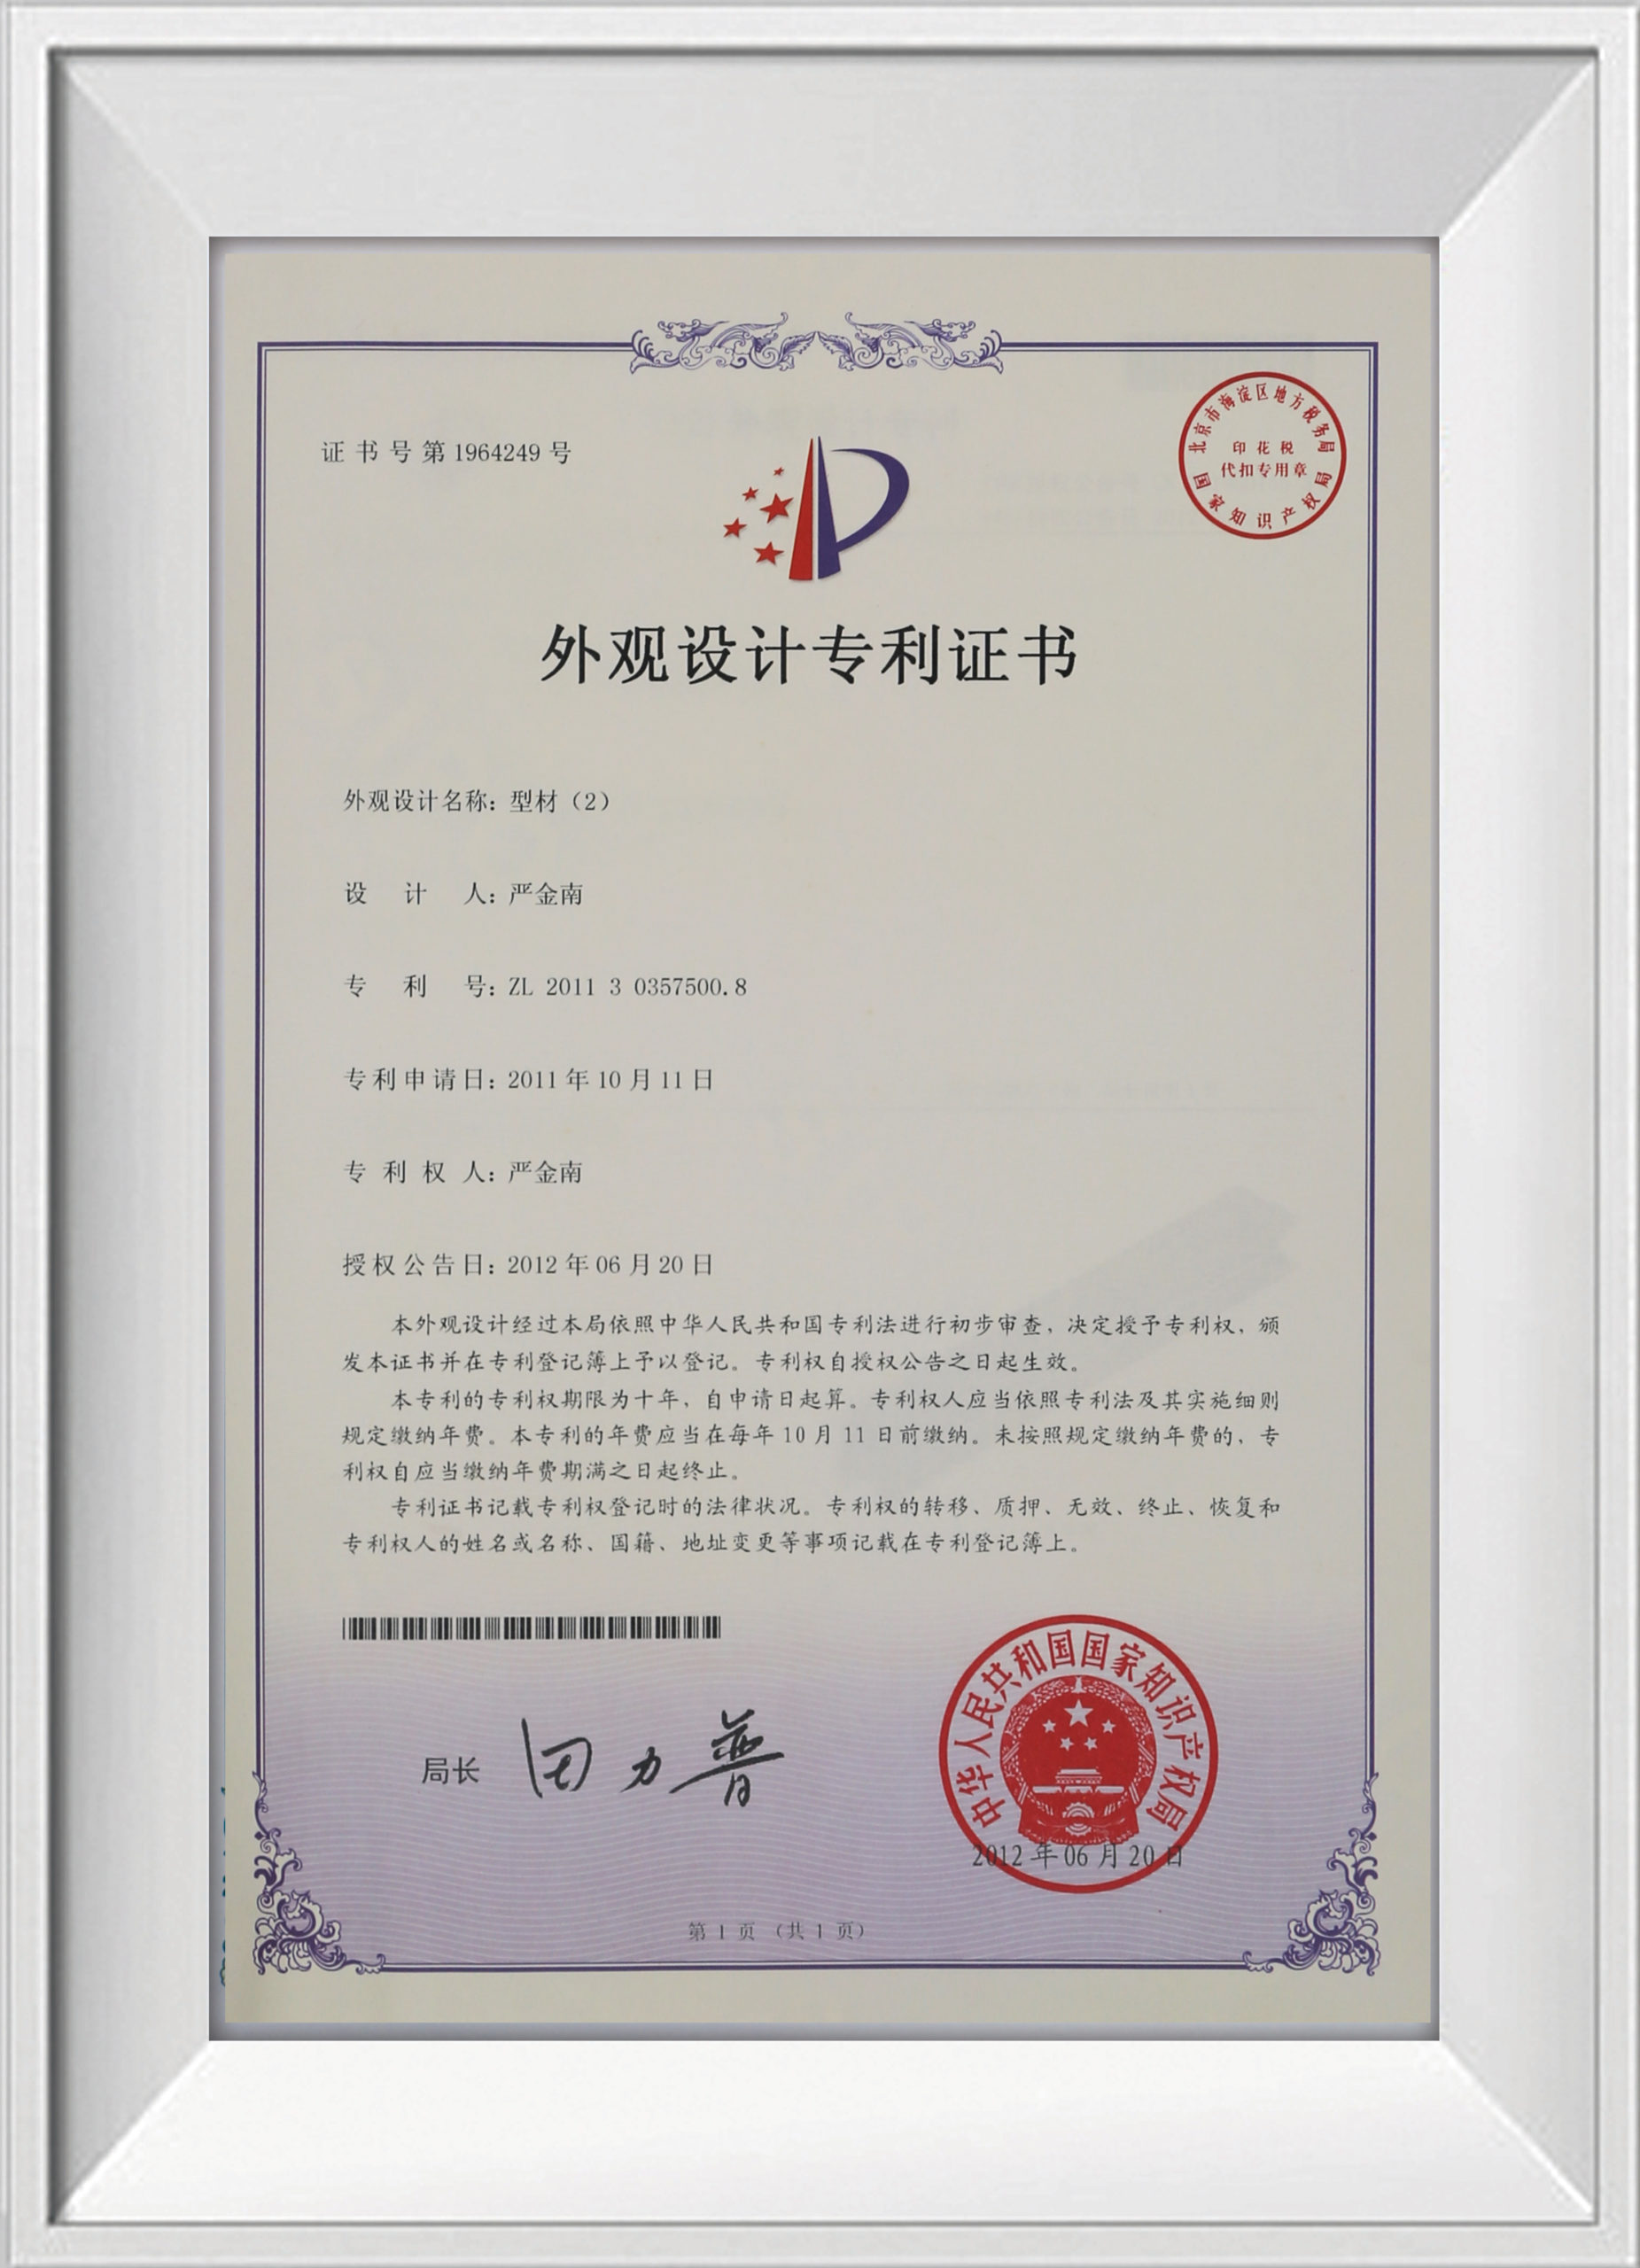 Qualification Certificate 7